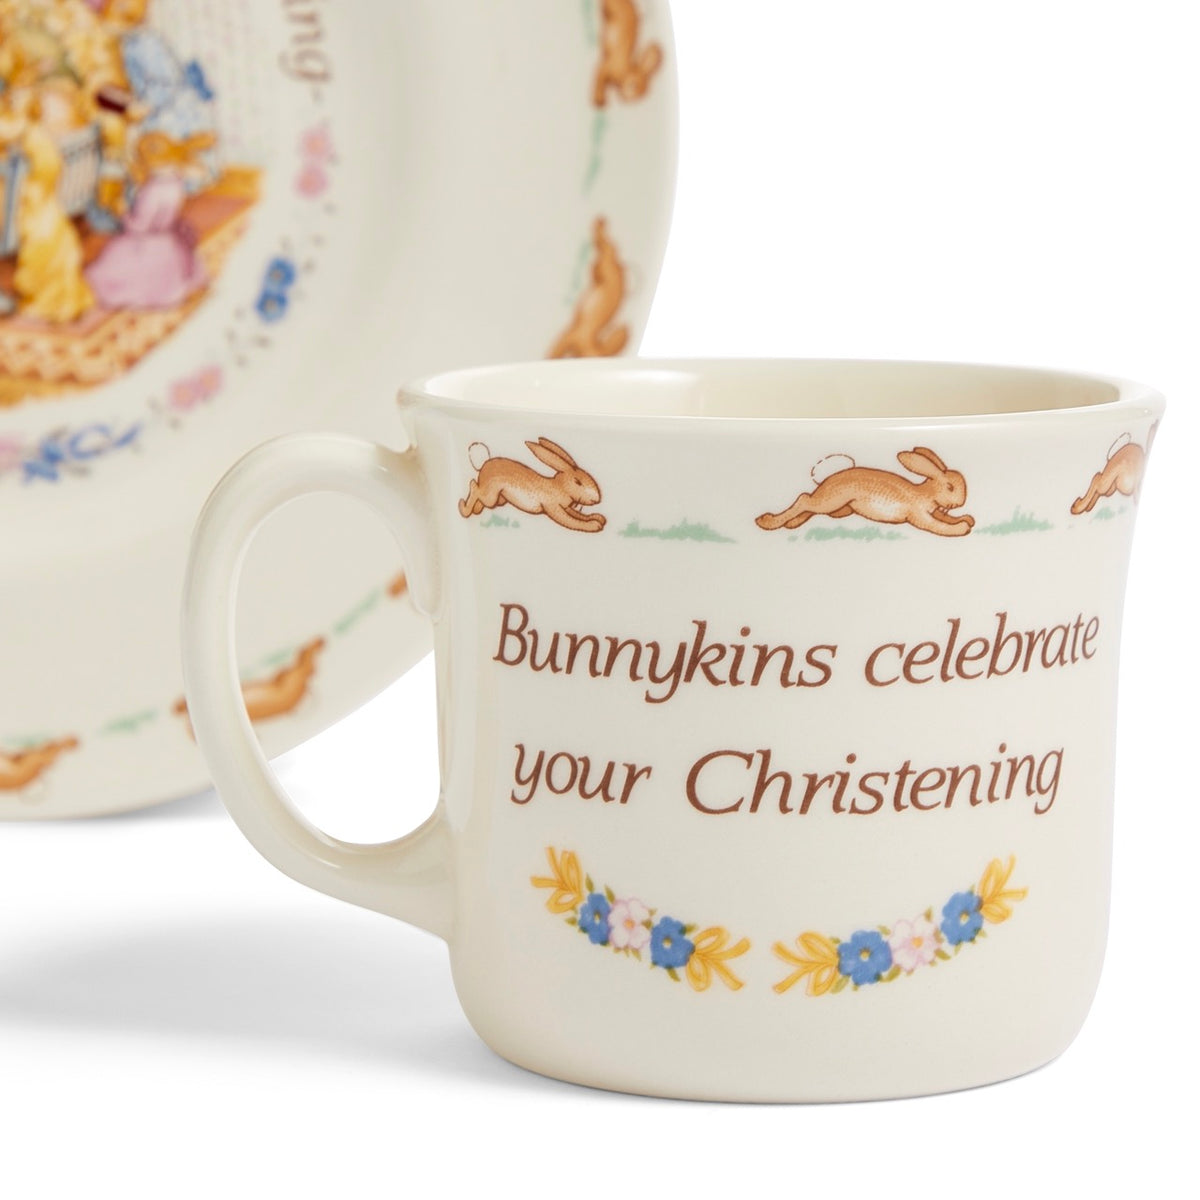 Bunnykins Christening Plate & Mug, 2-Piece Set